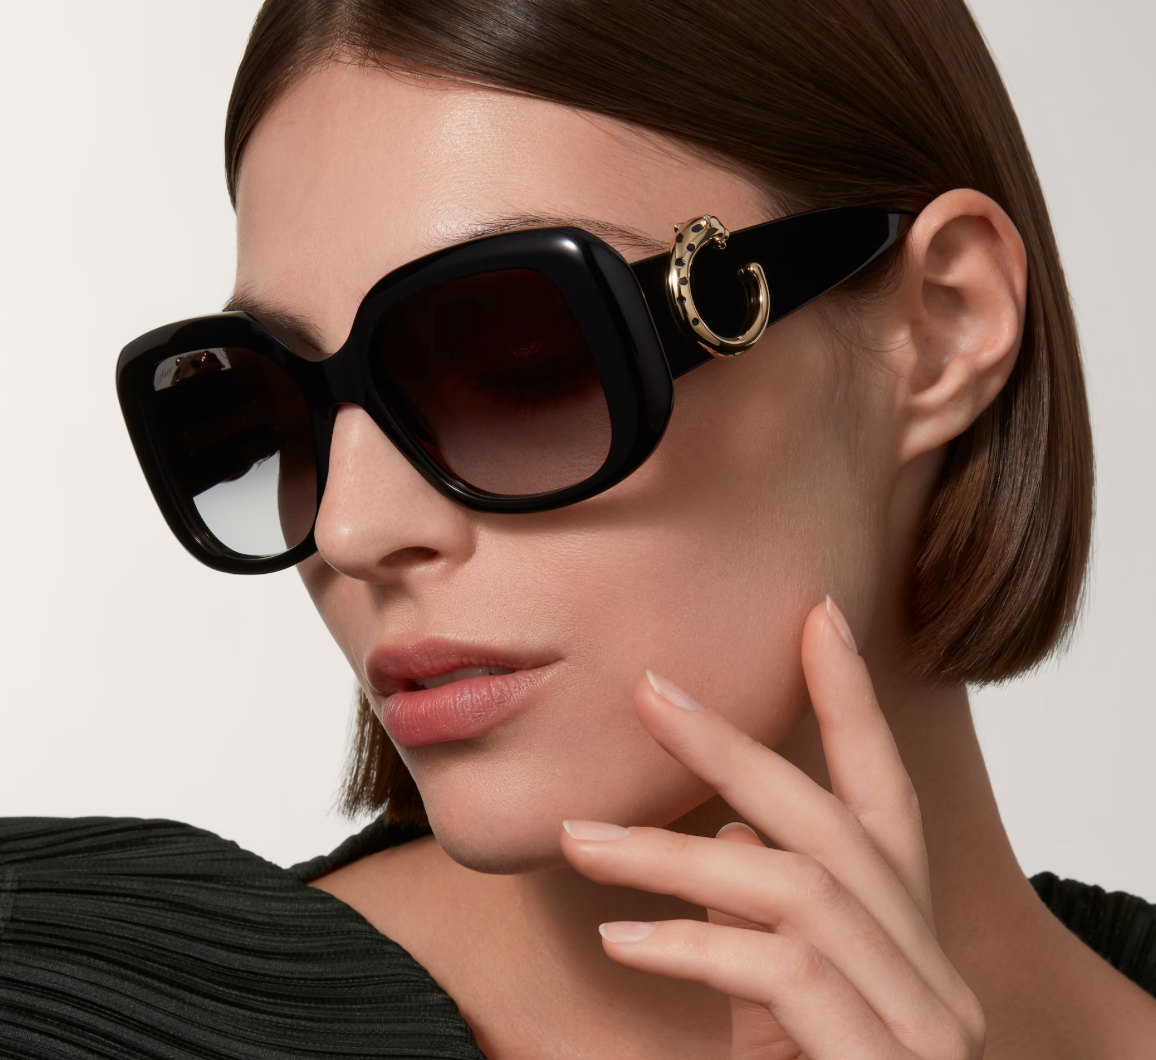 Cartier CT0471S-001 54mm New Sunglasses